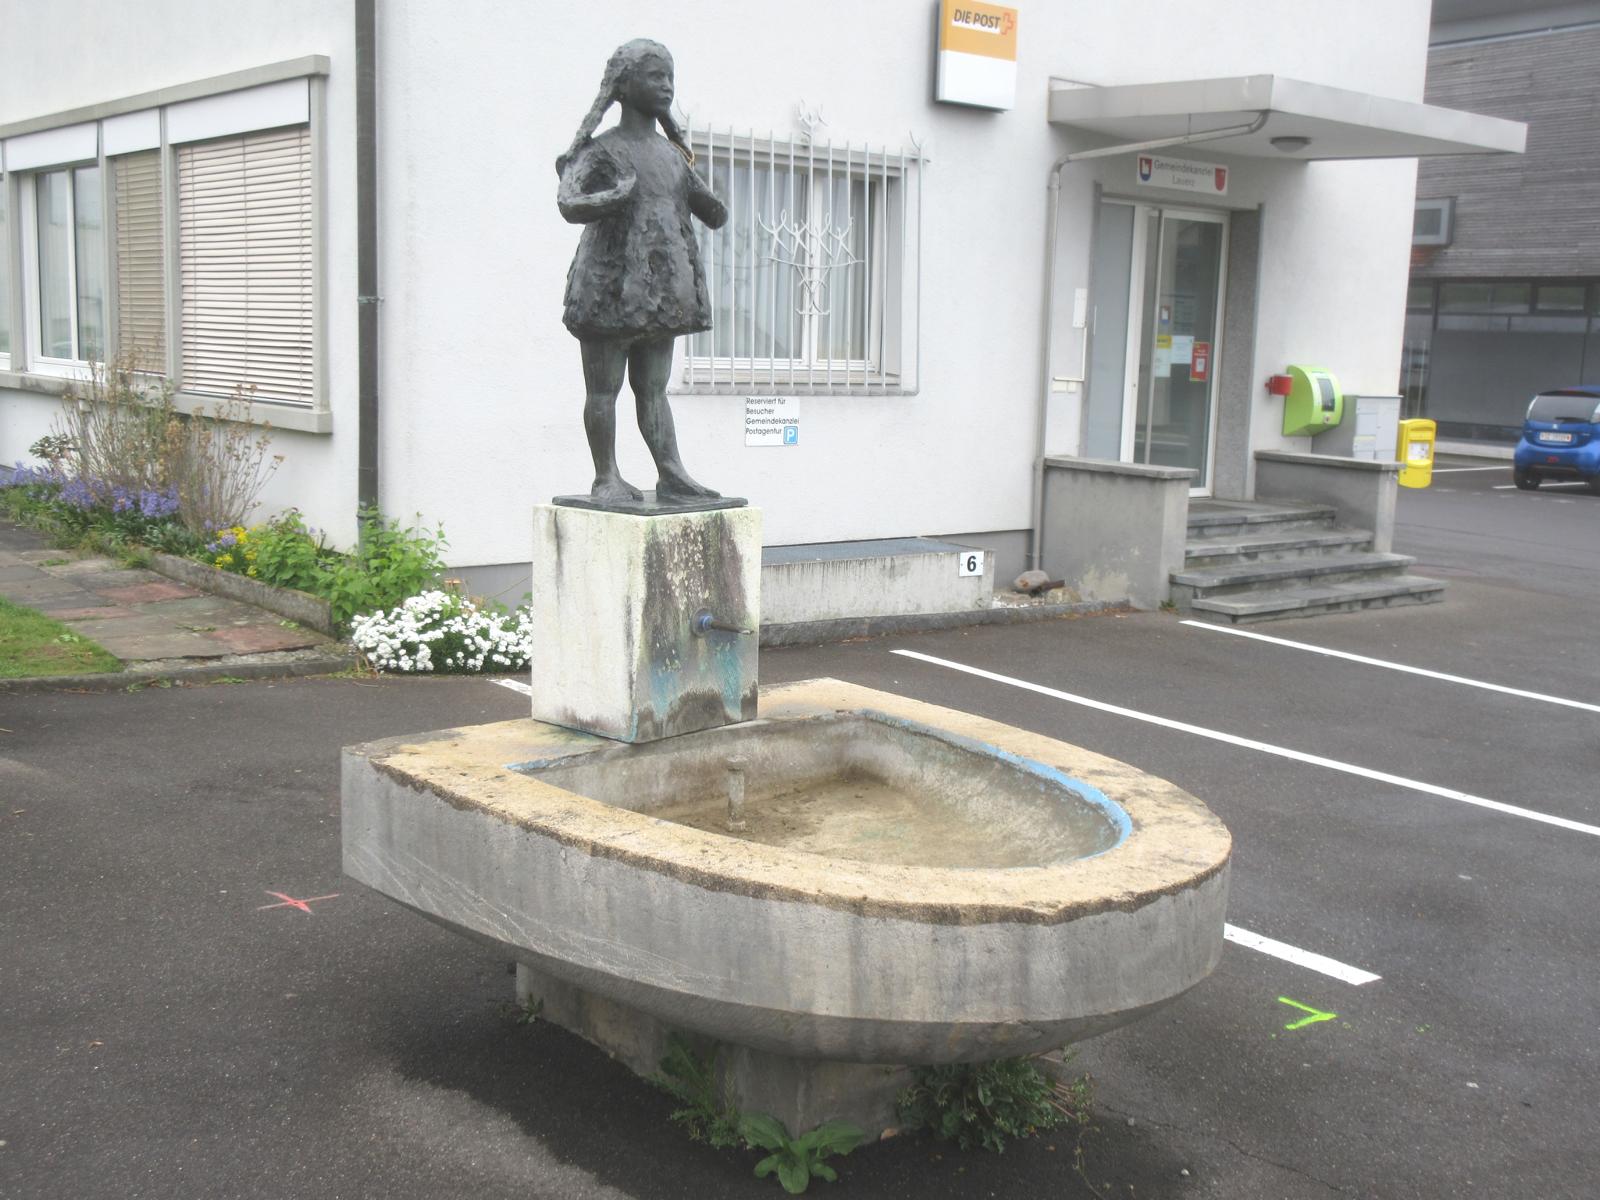 Husmatt: Schulhausbrunnen (Schulmädchen) *** 1963 *** gelblicher Kalk, viele Muscheln, u.a. Nerineen (Spiralschnecken) *** Bronze *** Bildhauer: <a href="http://www.rolfbrem.ch" target="_blank">Rolf Brem (1926-2014)</a>